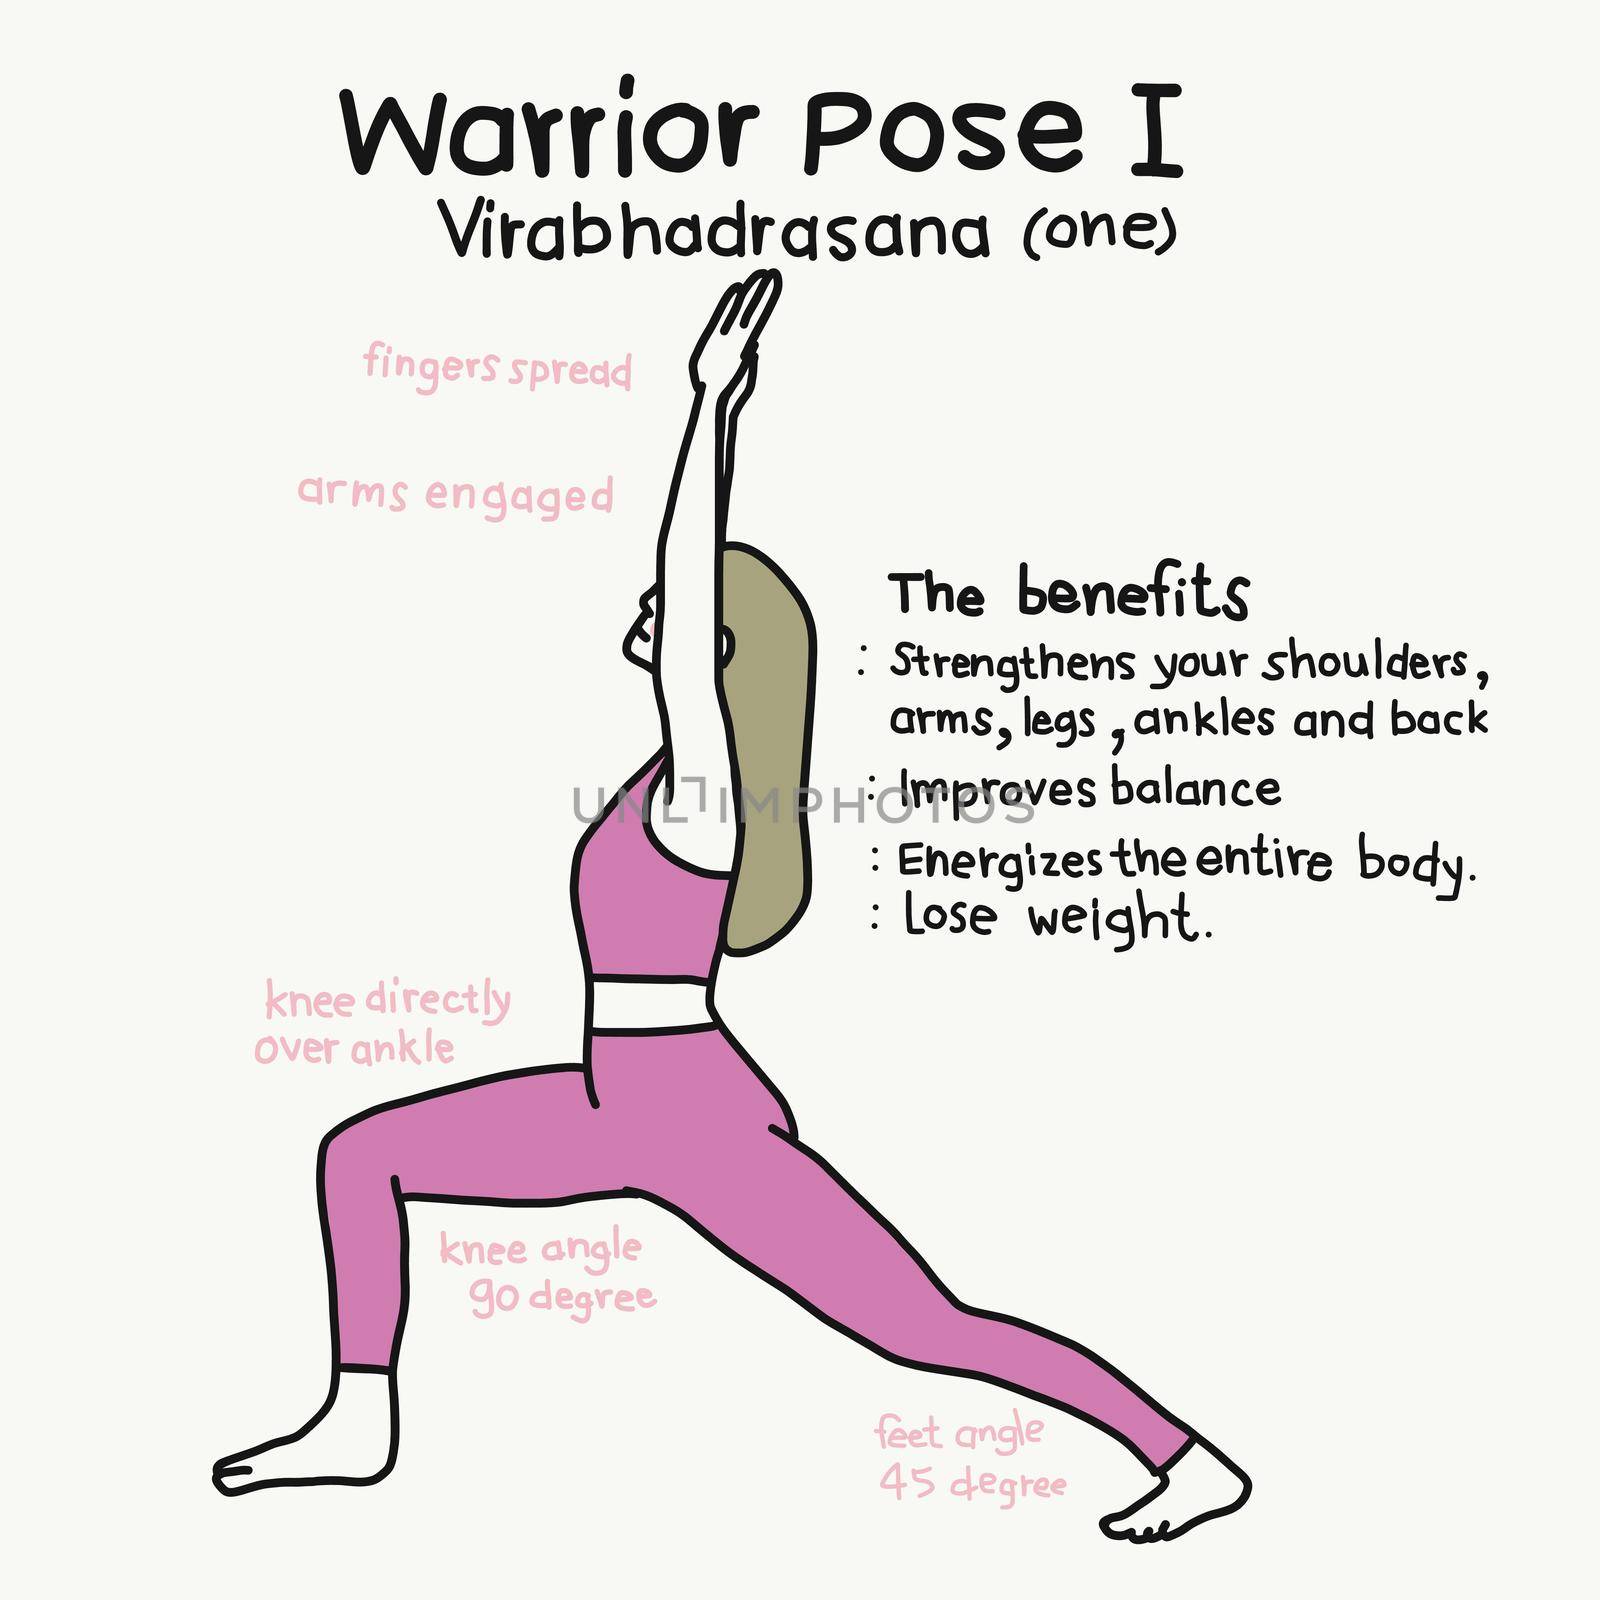 Warrior I yoga pose and benefits cartoon vector illustration